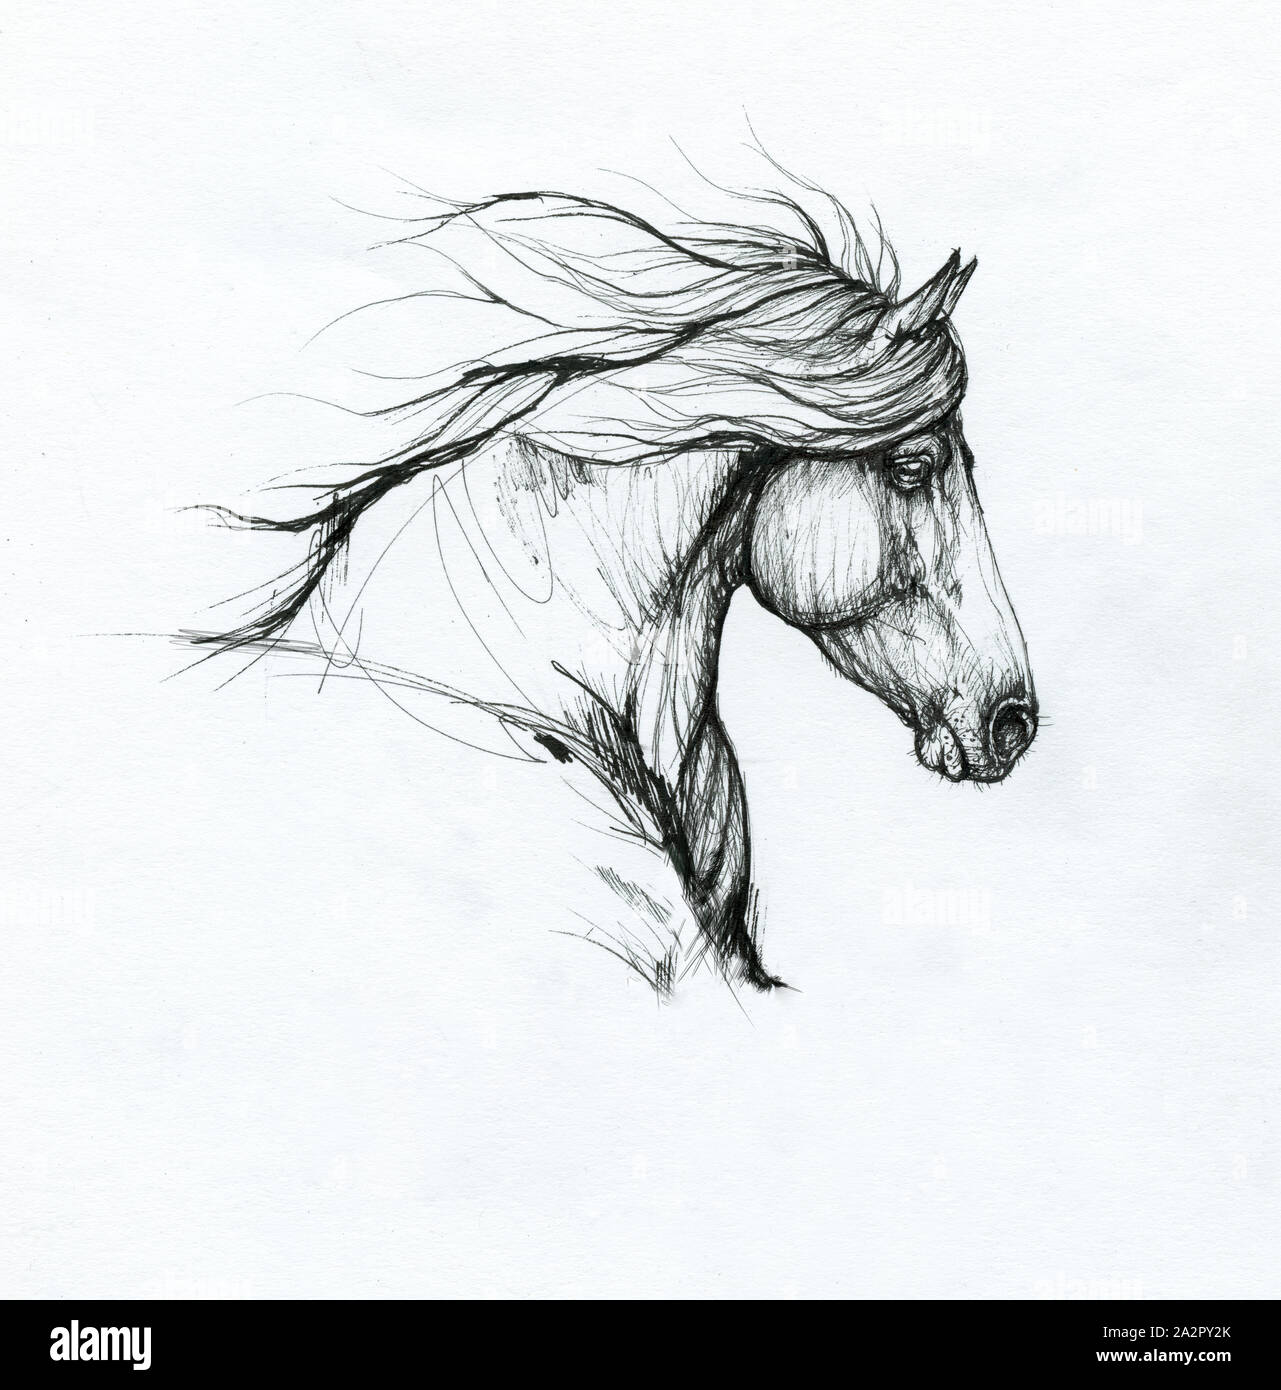 horse head drawing Stock Photo - Alamy